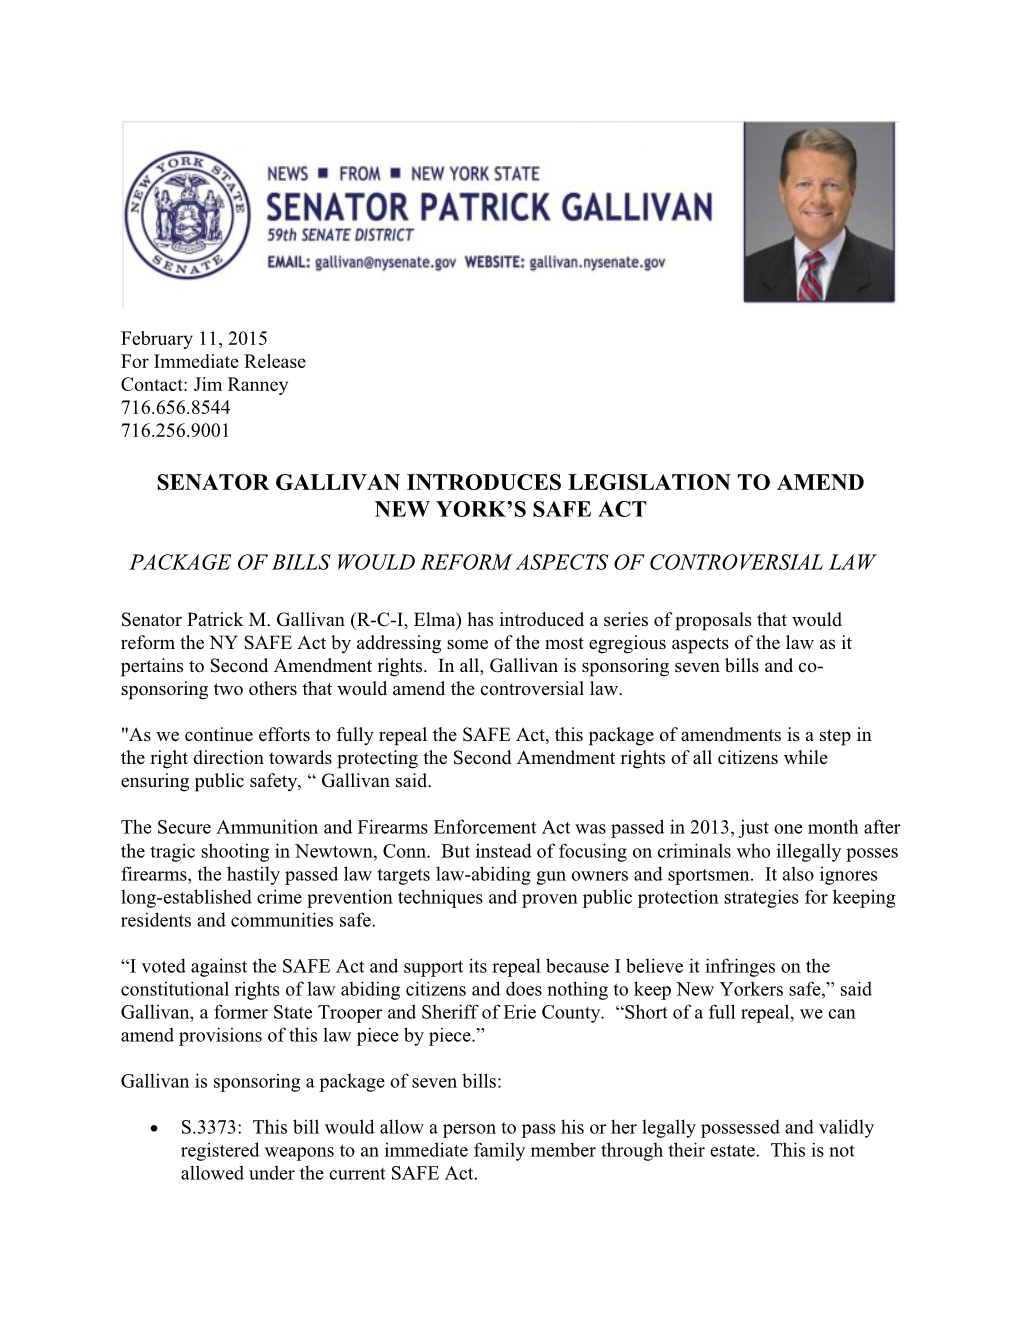 Senator Gallivan Introduces Legislation to Amend New York S Safe Act